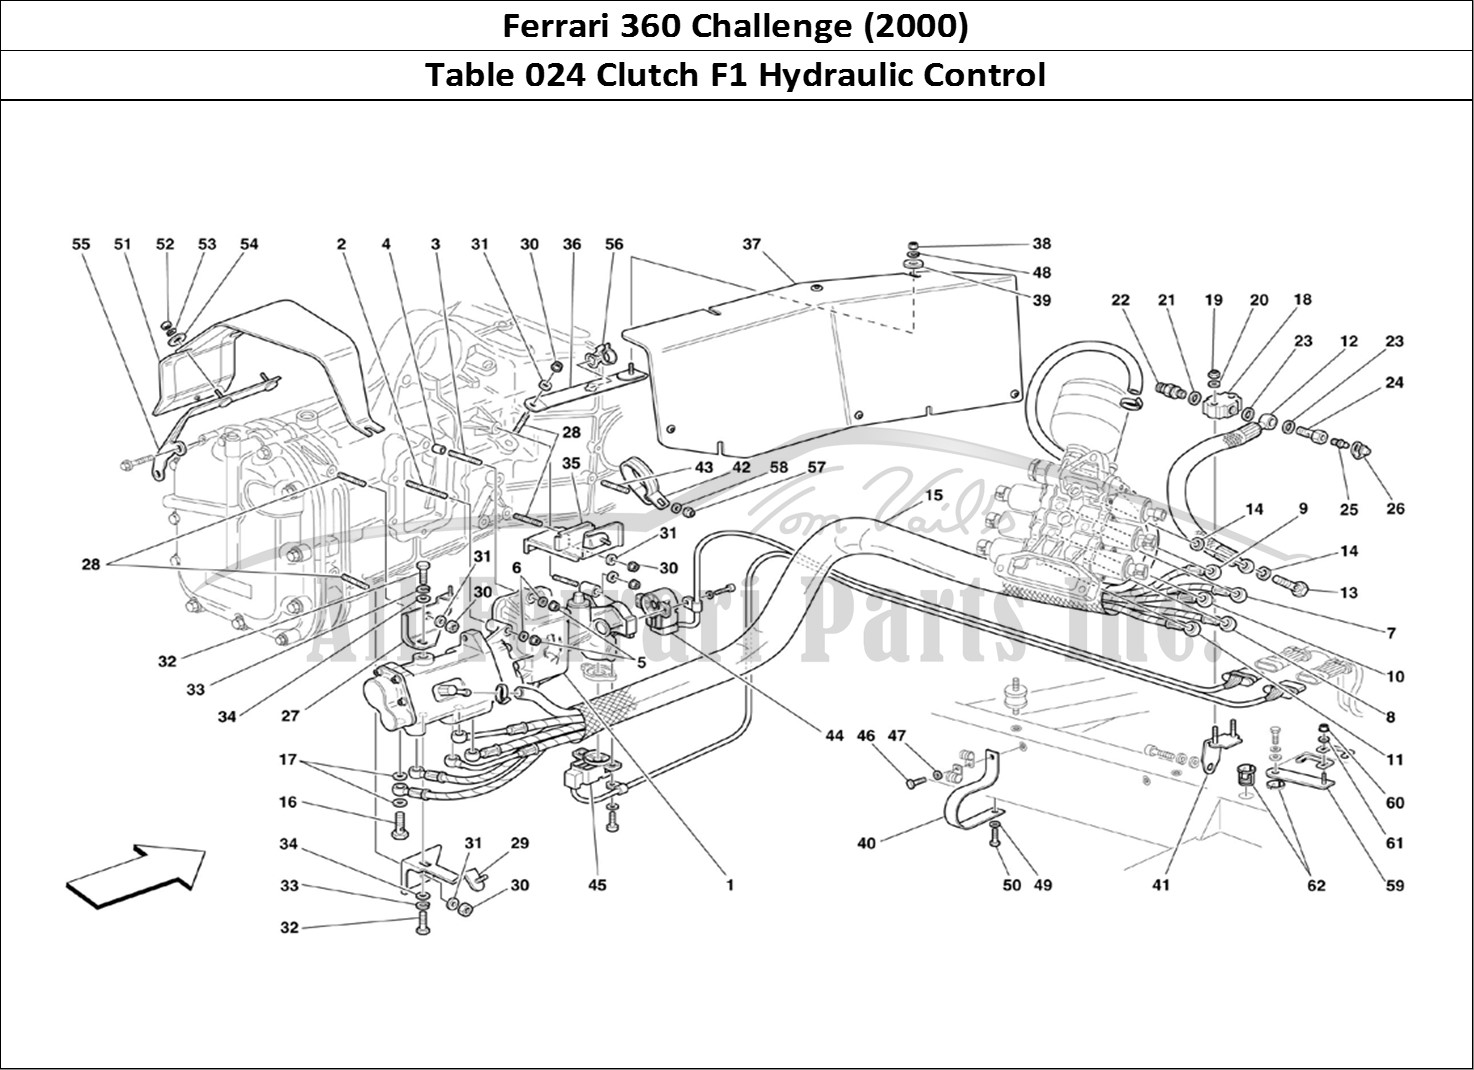 Ferrari Parts Ferrari 360 Challenge (2000) Page 024 F1 Clutch Hydraulic Contr